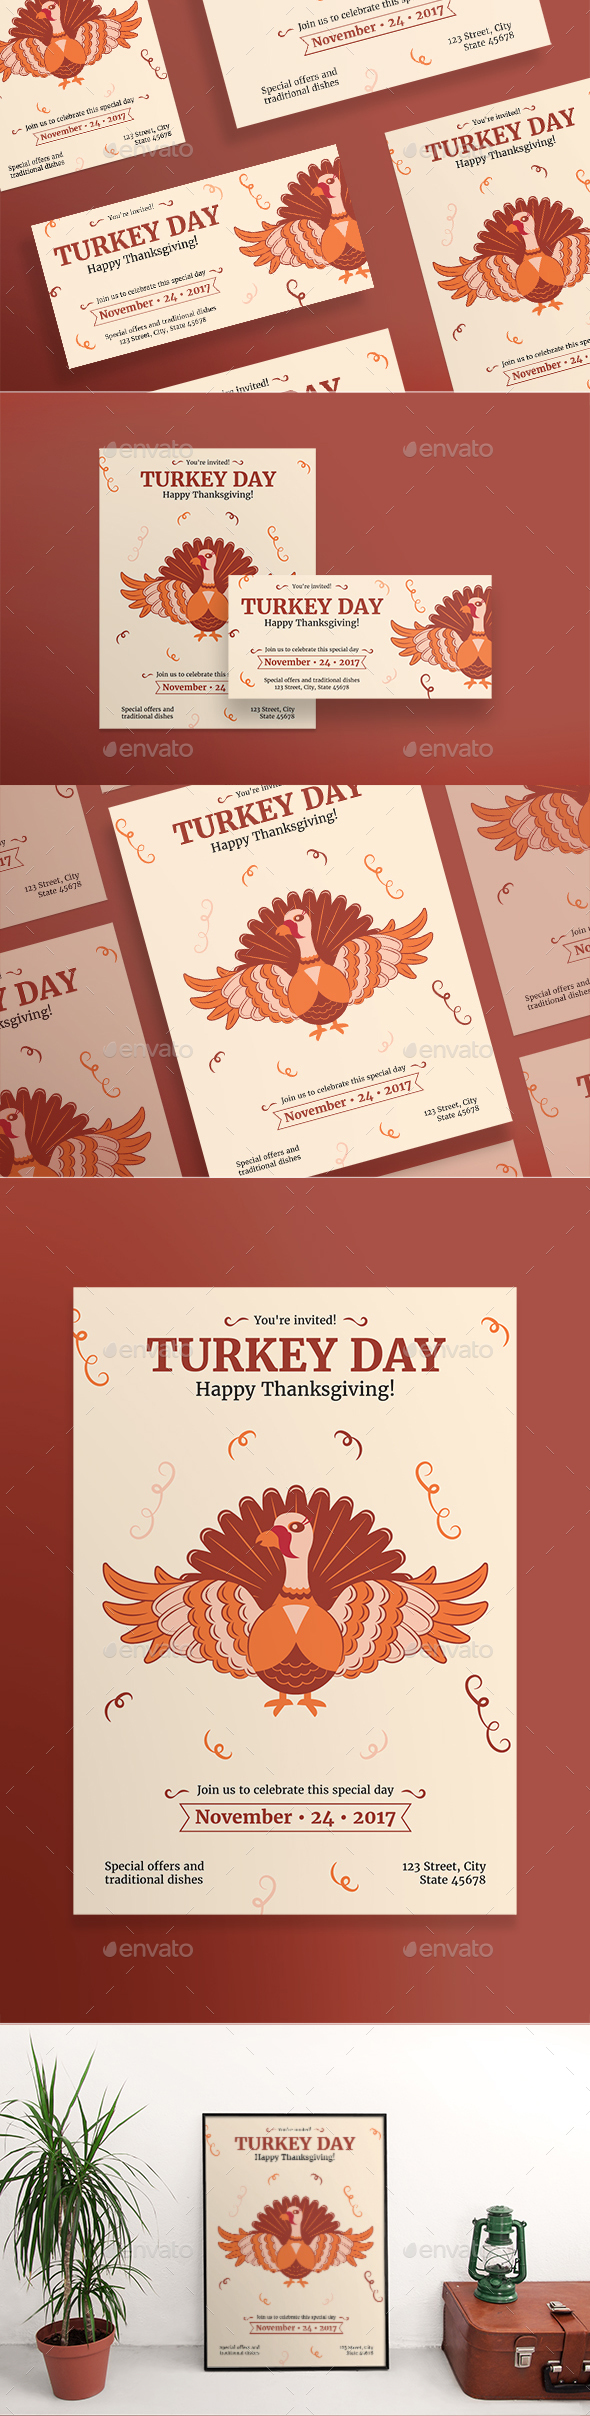 Turkey Day Flyers